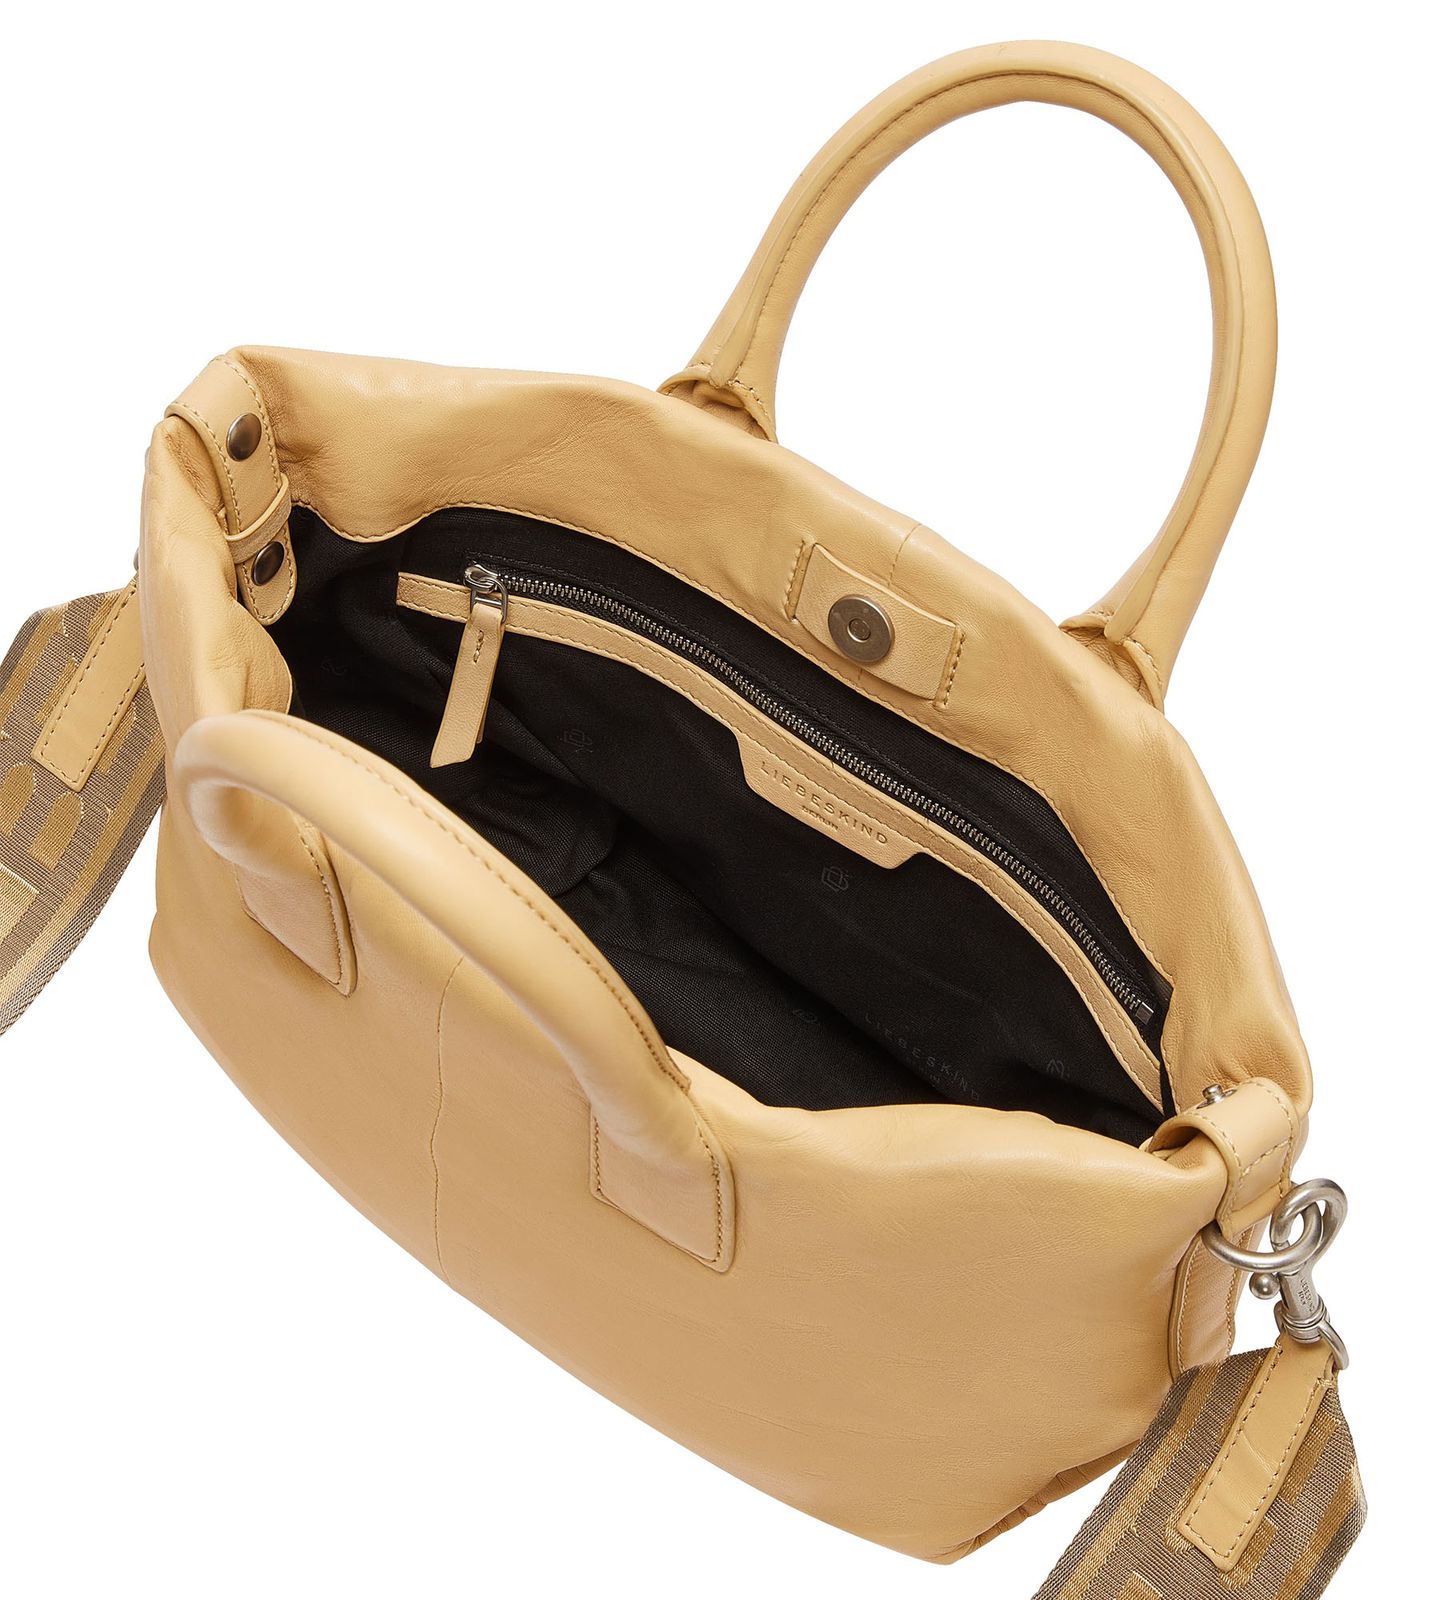 LIEBESKIND BERLIN Chelsea Puffy Handbag S Champagne | Buy bags, purses ...